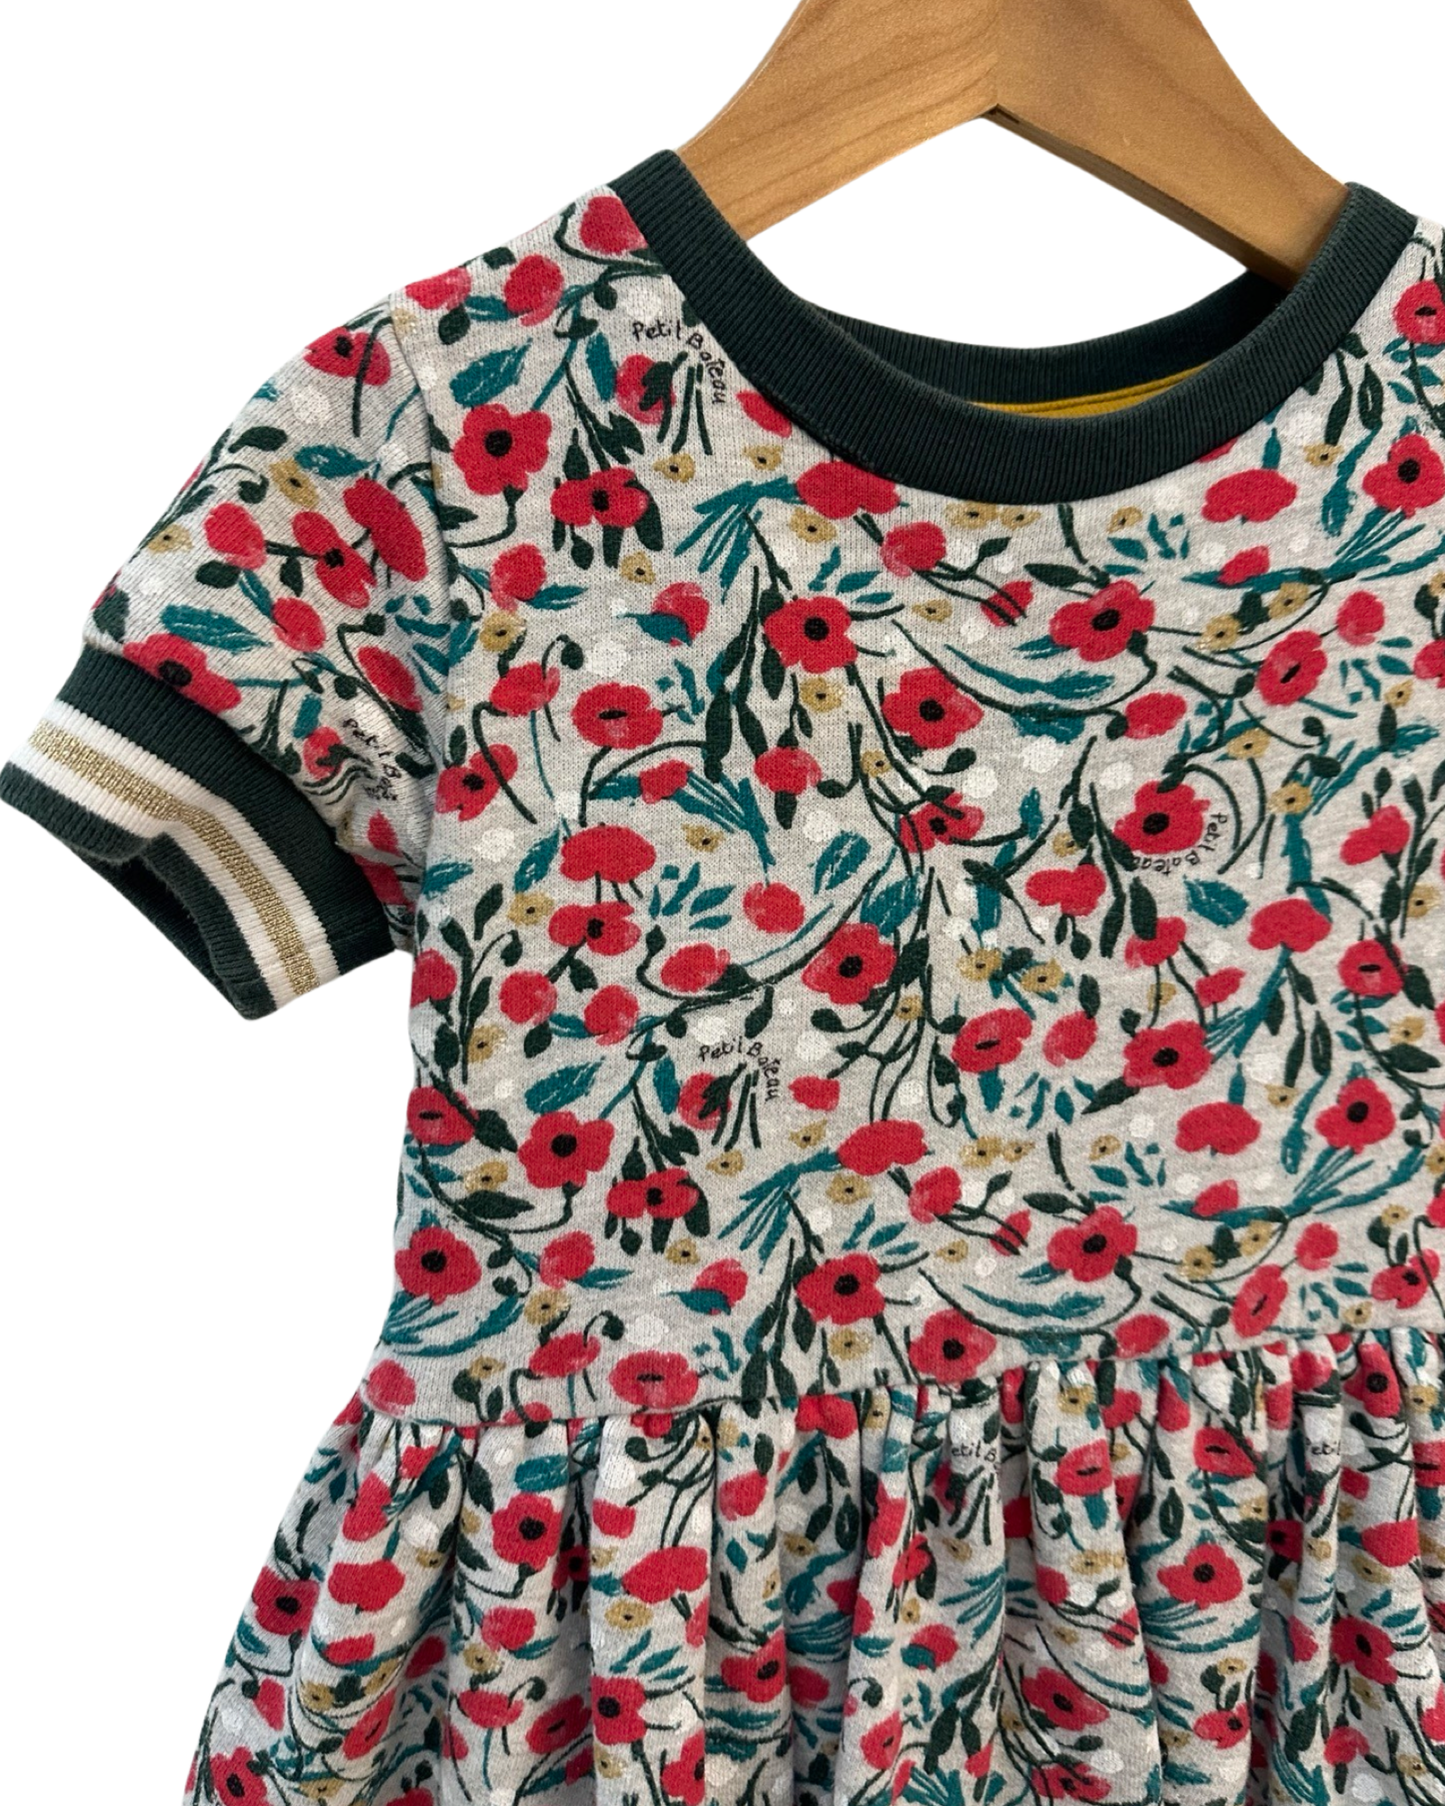 Petit Bateau floral print jersey dress (3-4yrs)